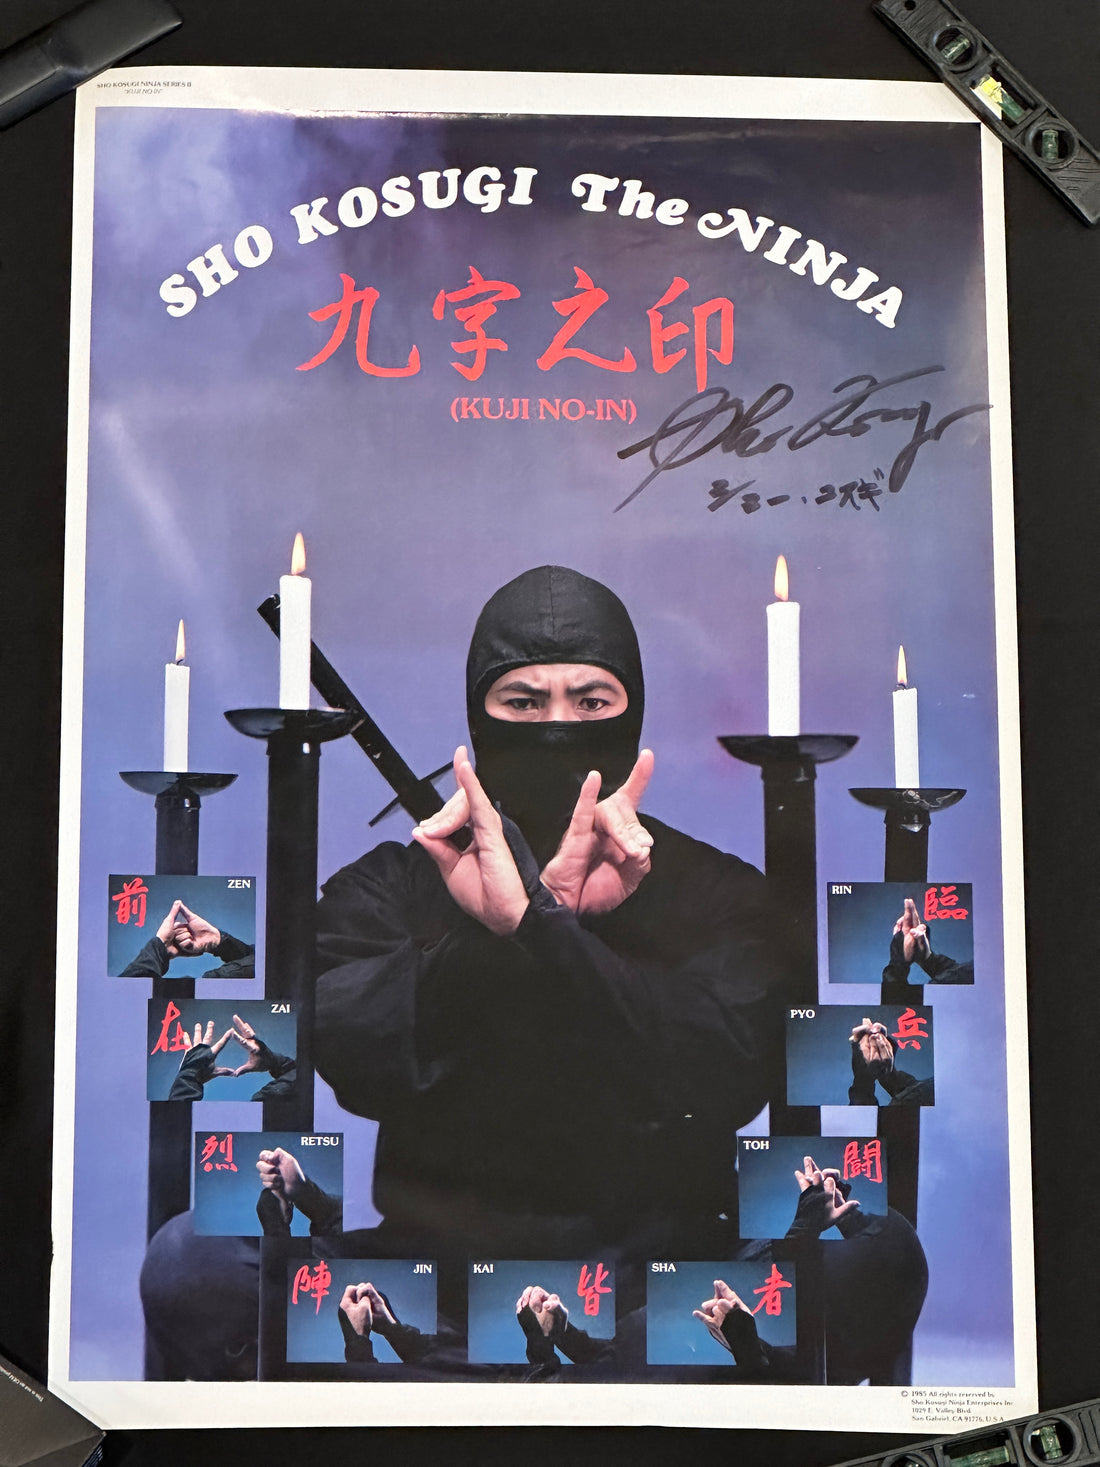 Sho Kosugi Autographed "Kuji No-In" poster.